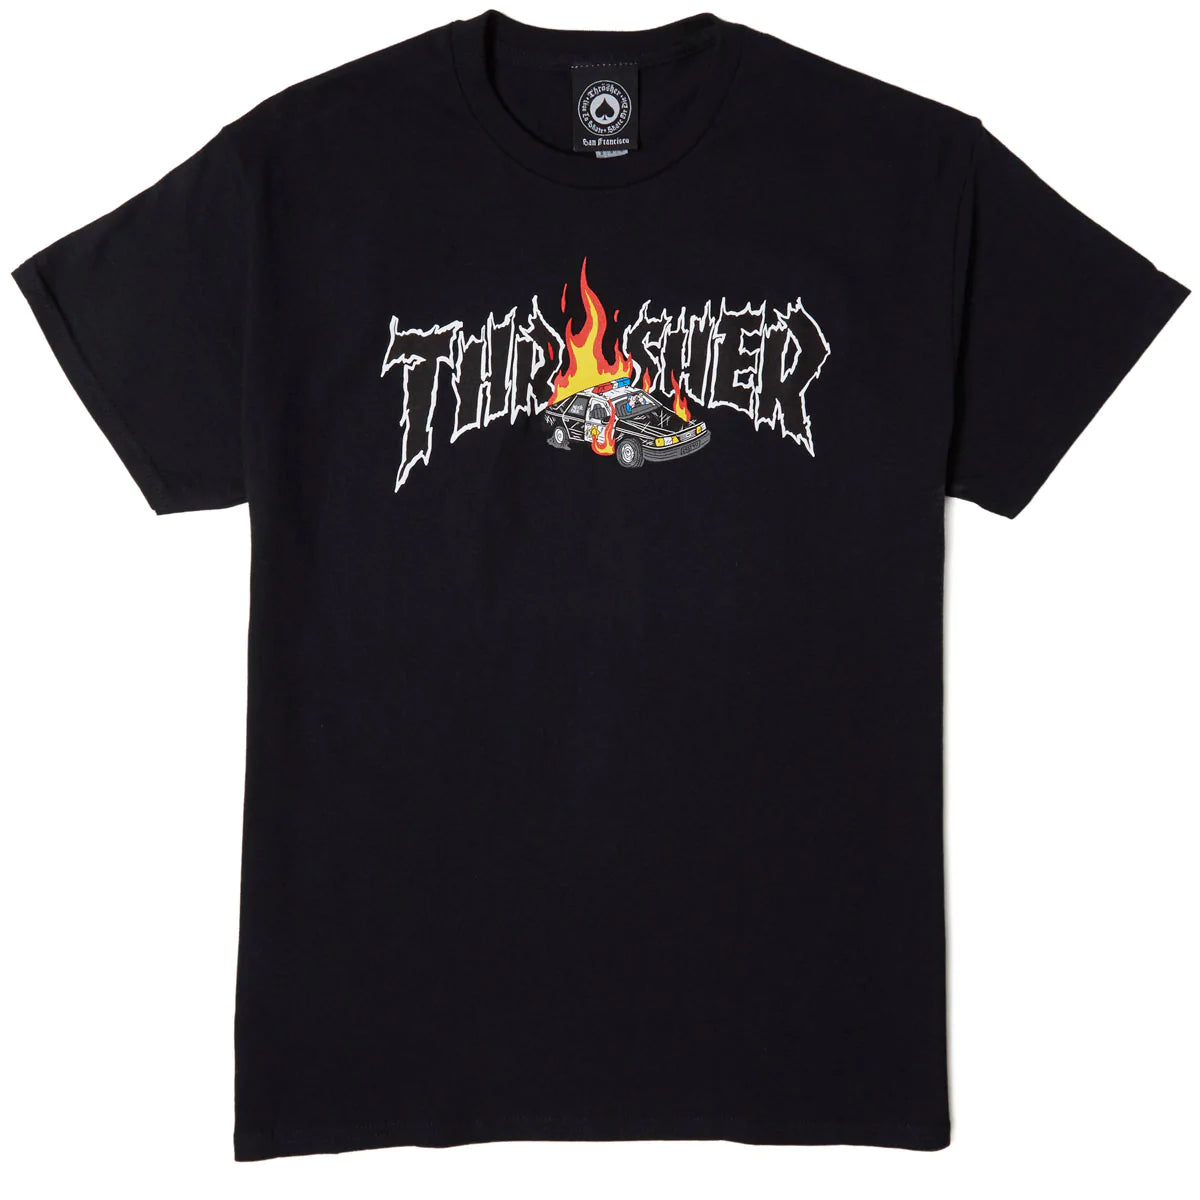 Thrasher Cop Car T-Shirt - Black image 1